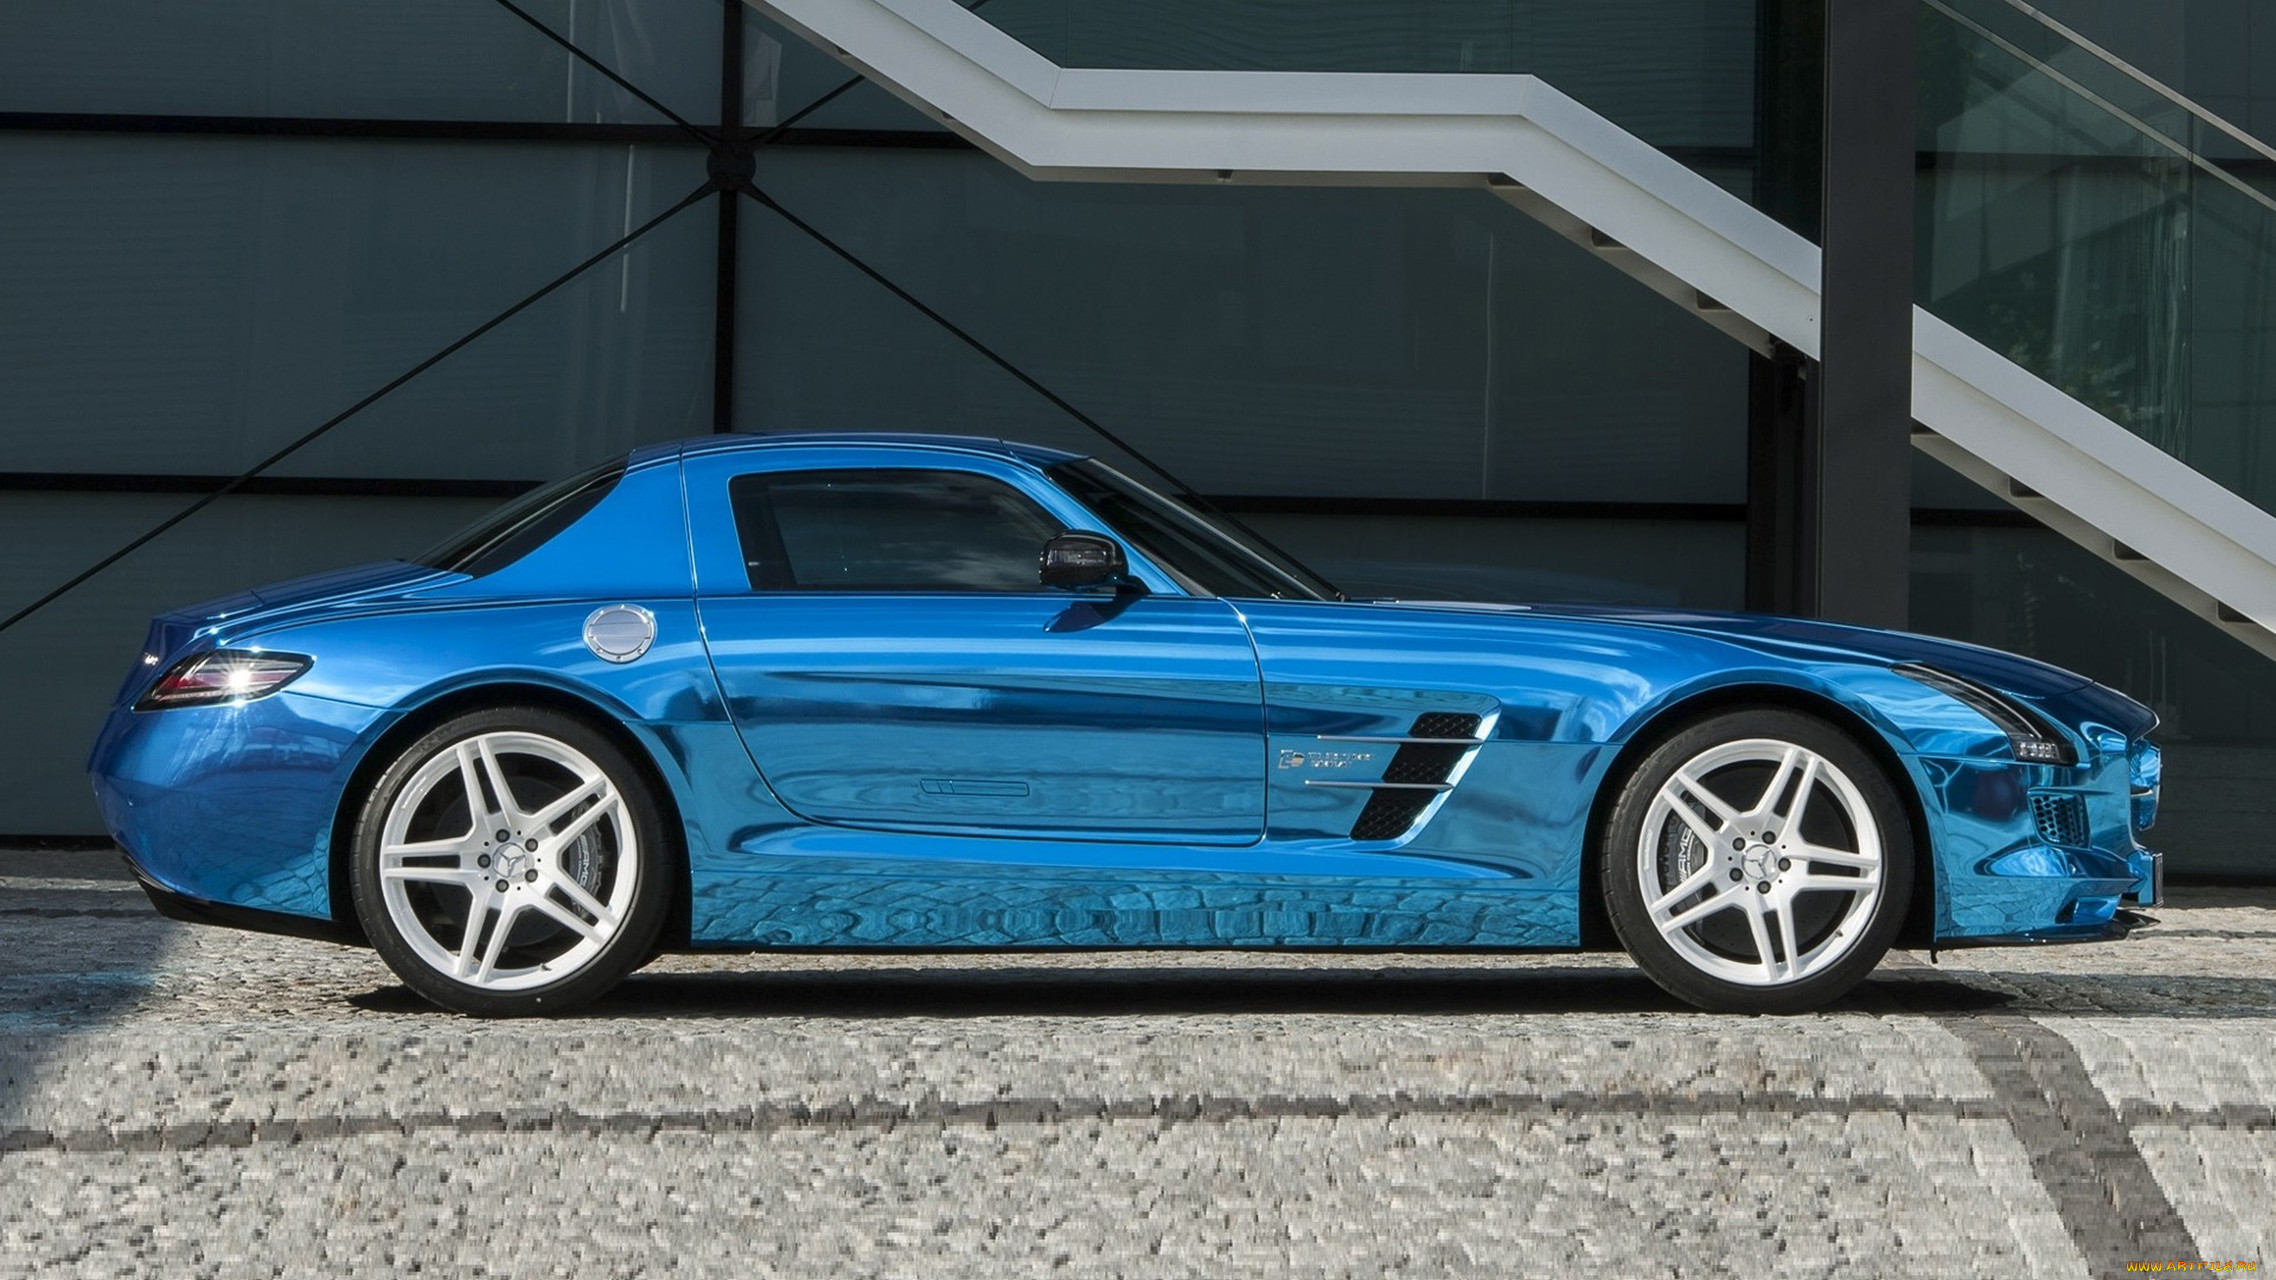 mercedes-benz sls amg coupe electric car 2014, , mercedes-benz, 2014, car, electric, coupe, amg, sls, blue